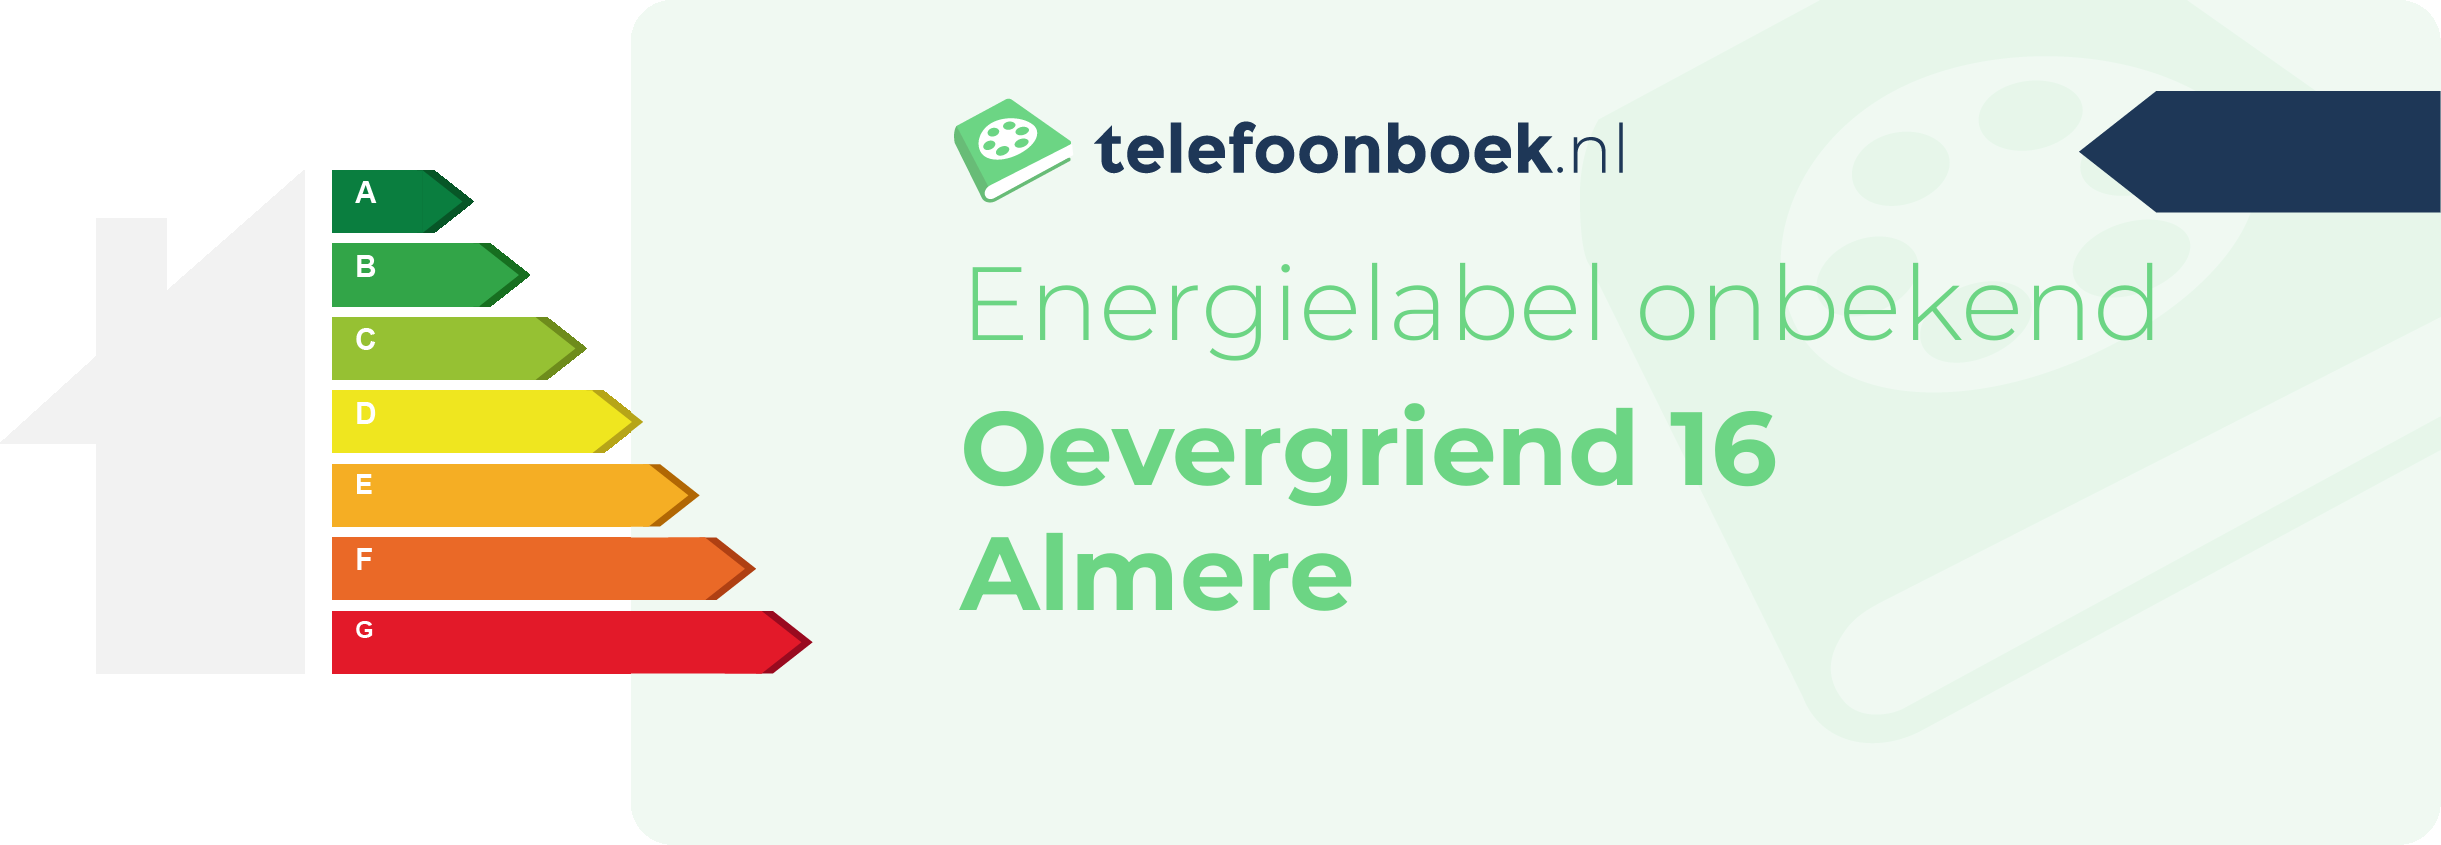 Energielabel Oevergriend 16 Almere